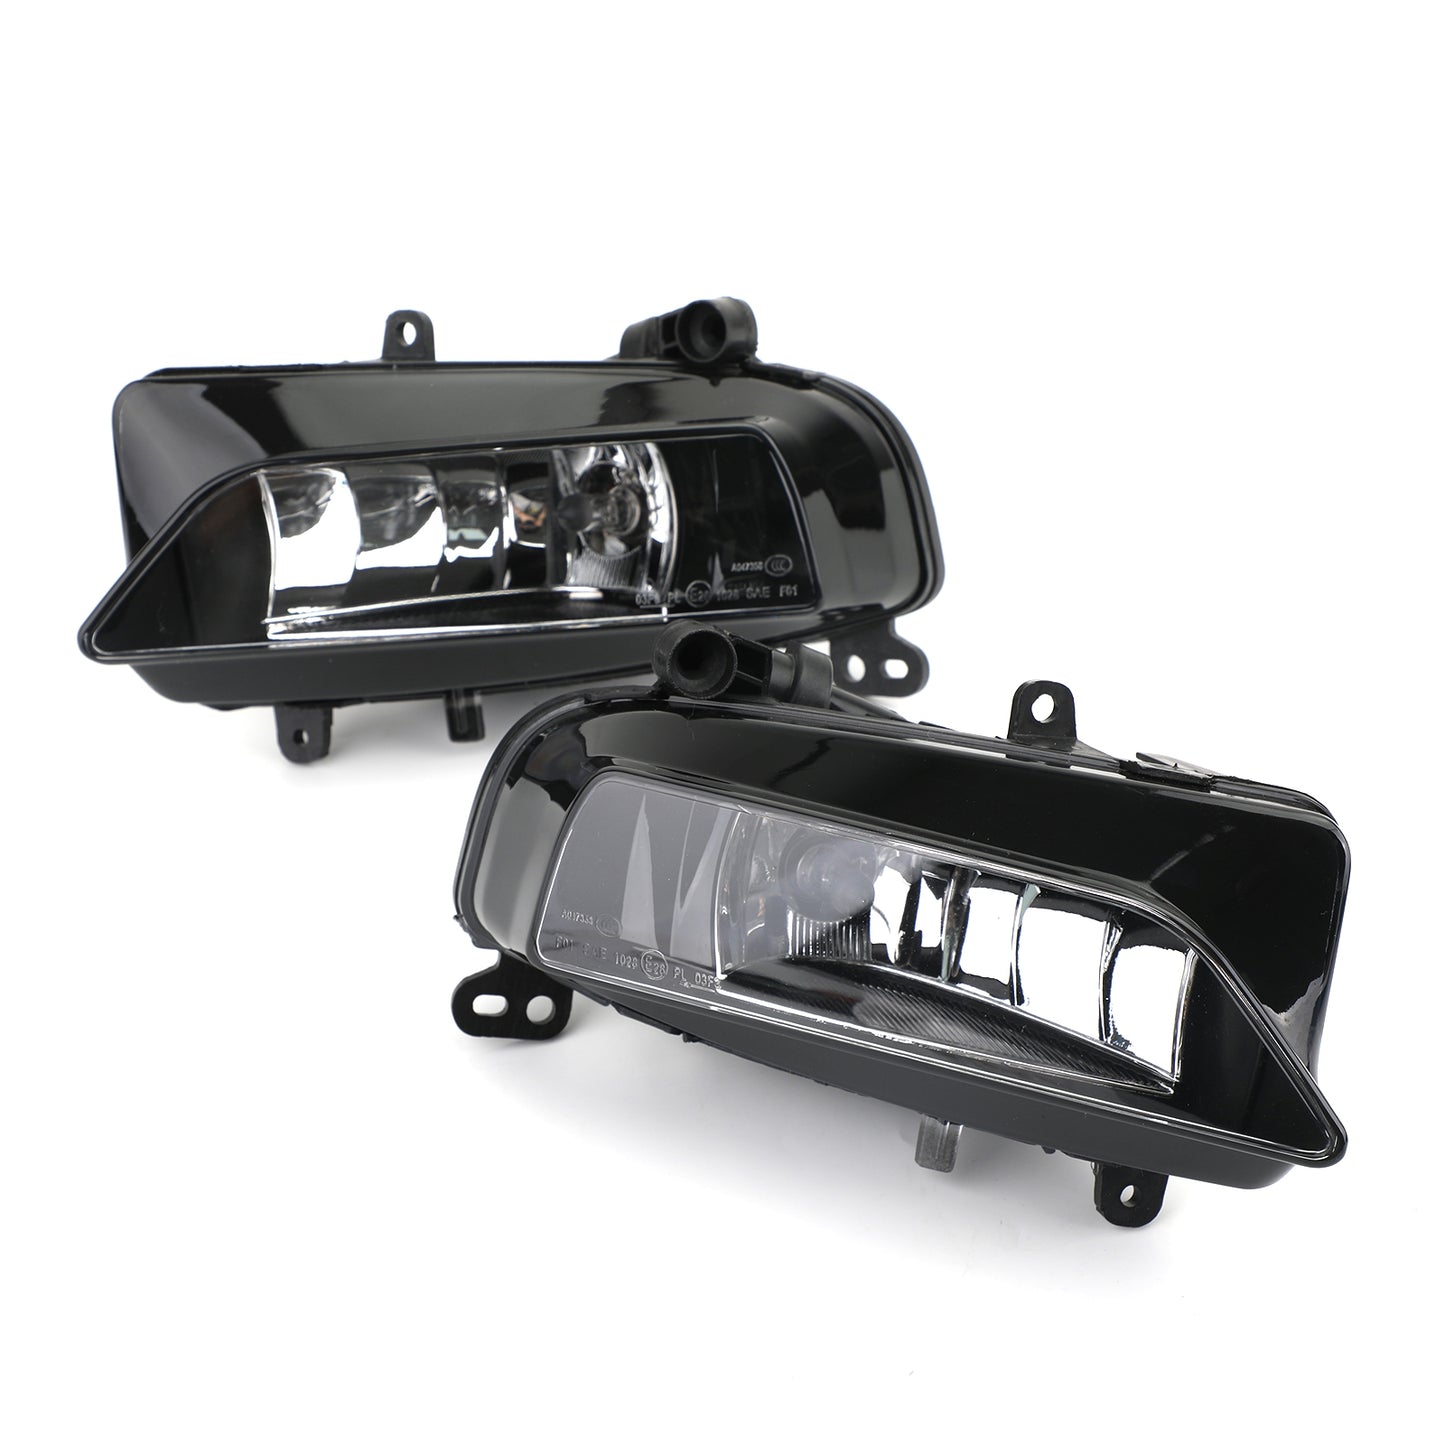 Pair Front Light Halogen Fog Lamp For AUDI S5 2013 2014 2015 2016 A5-S Line